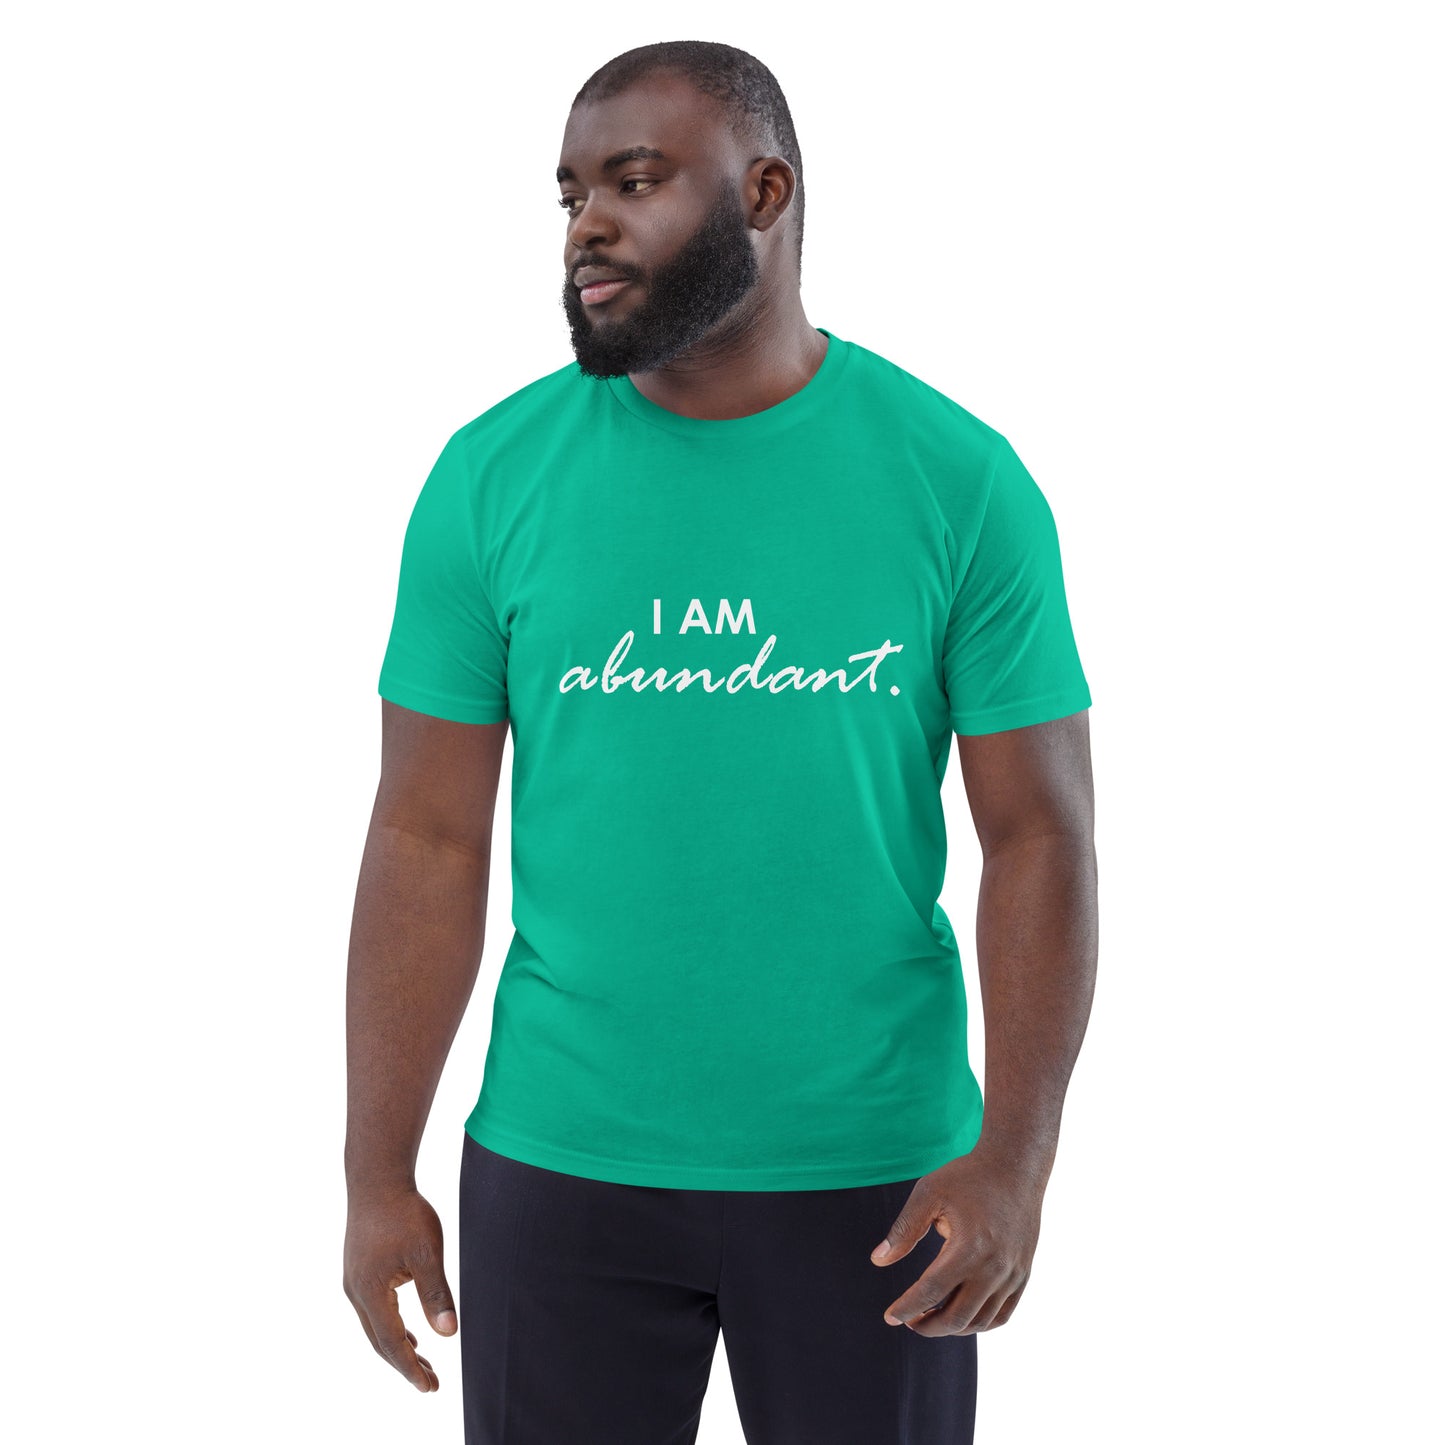 I AM ABUNDANT - Unisex organic cotton t-shirt